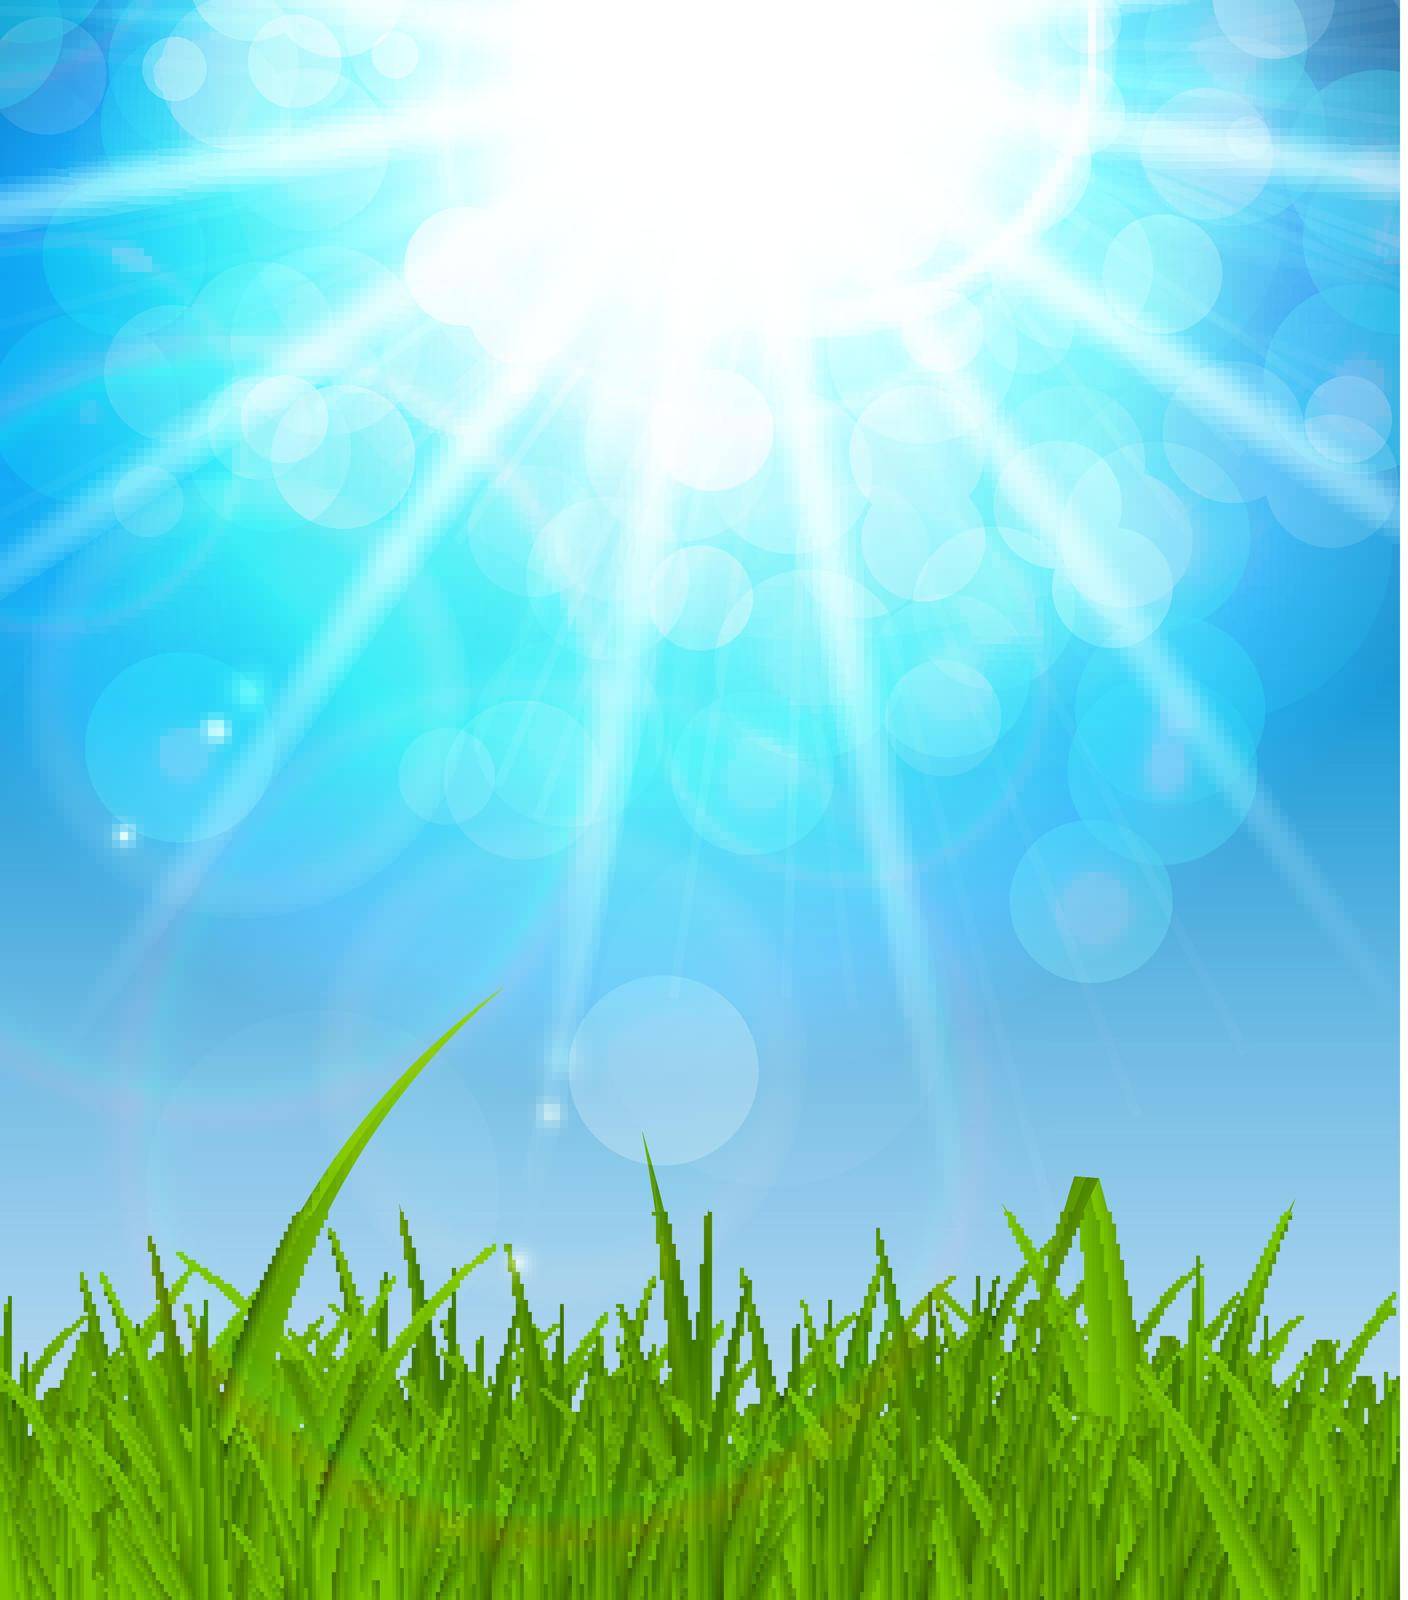 Natural Sunny Background Vector Illustration EPS10
